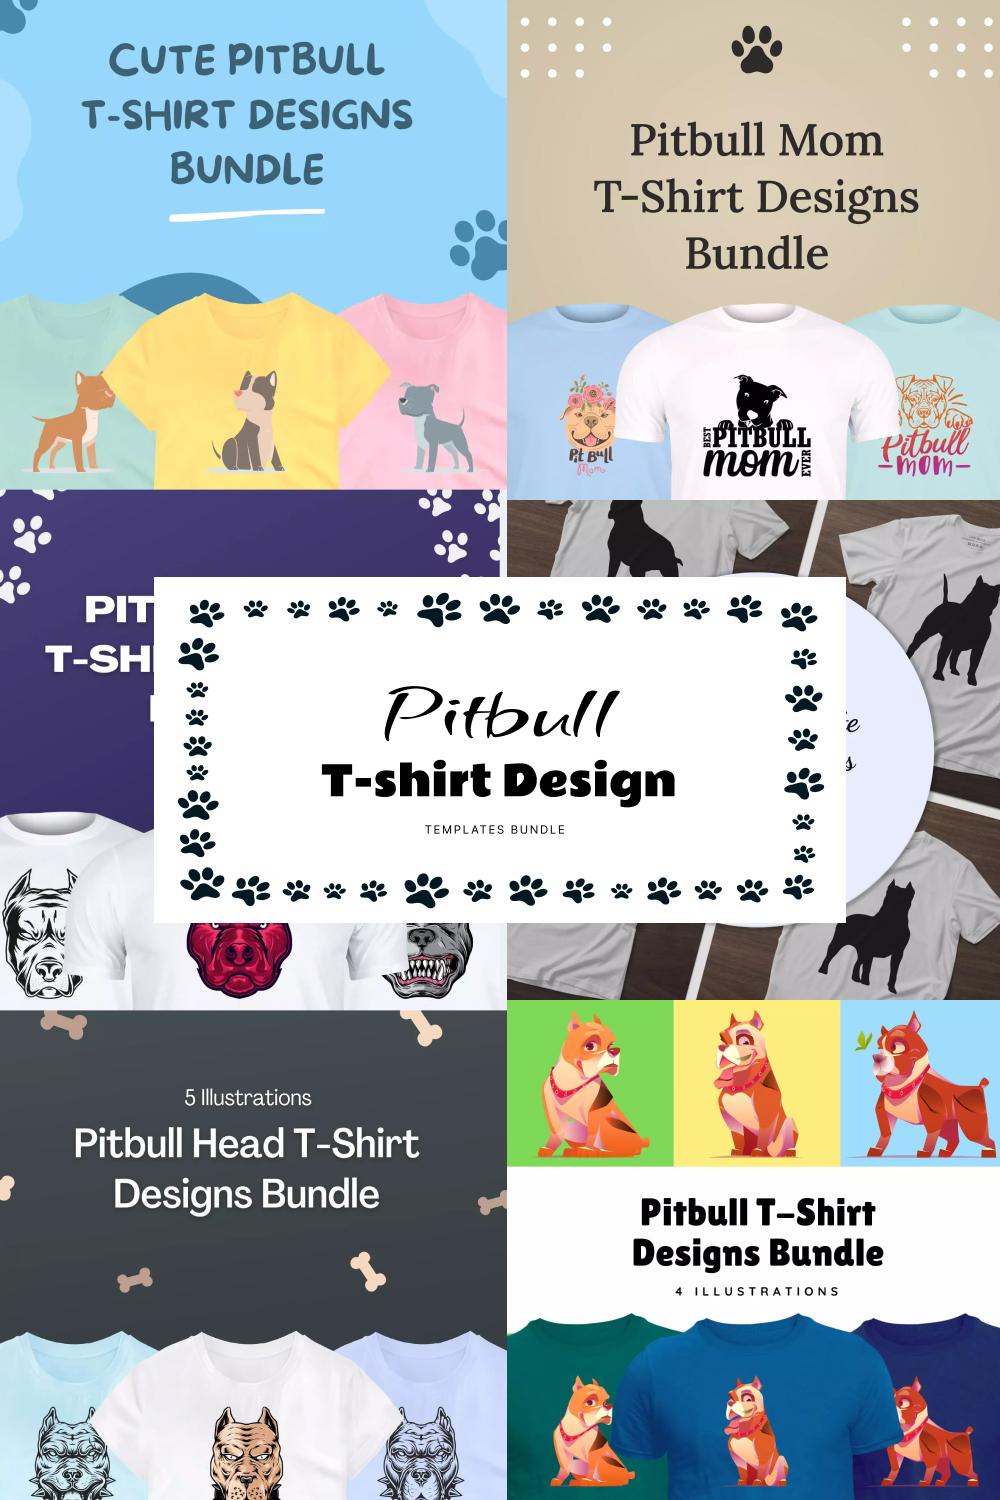 Pitbull t shirt design templates bundle images of pinterest.